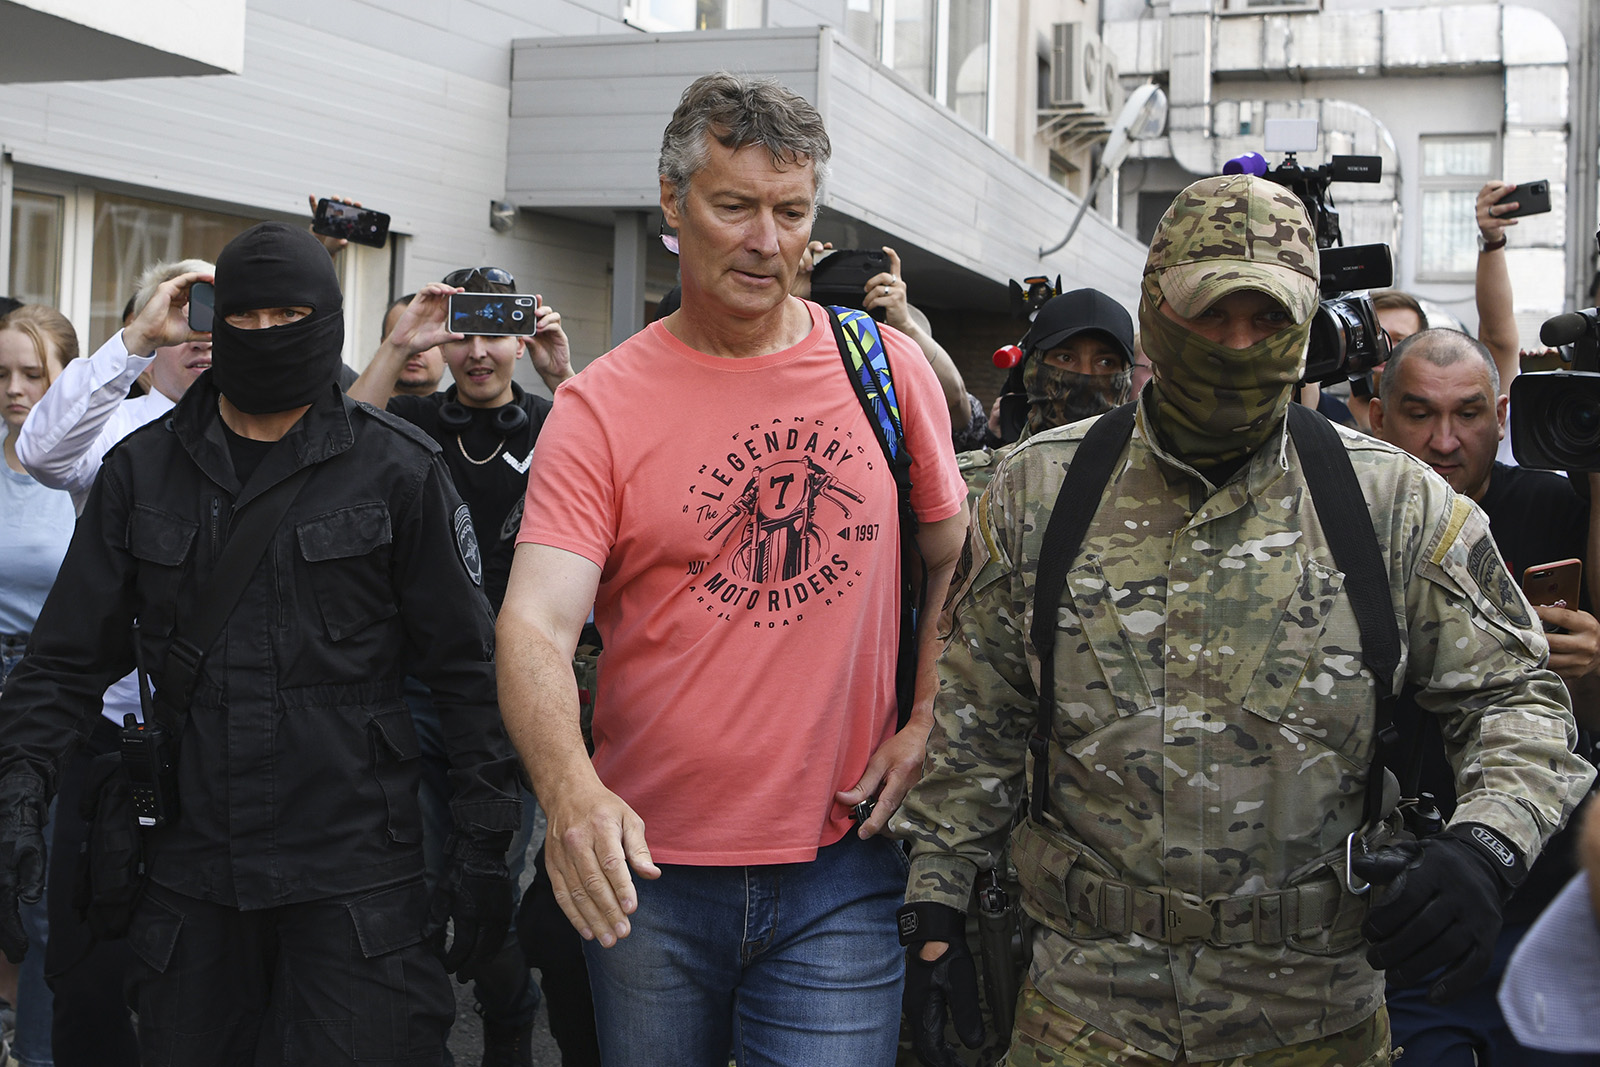 Police detain Yekaterinburg ex-mayor Yevgeny Roizman, center, in Yekaterinburg, Russia, on August 24.